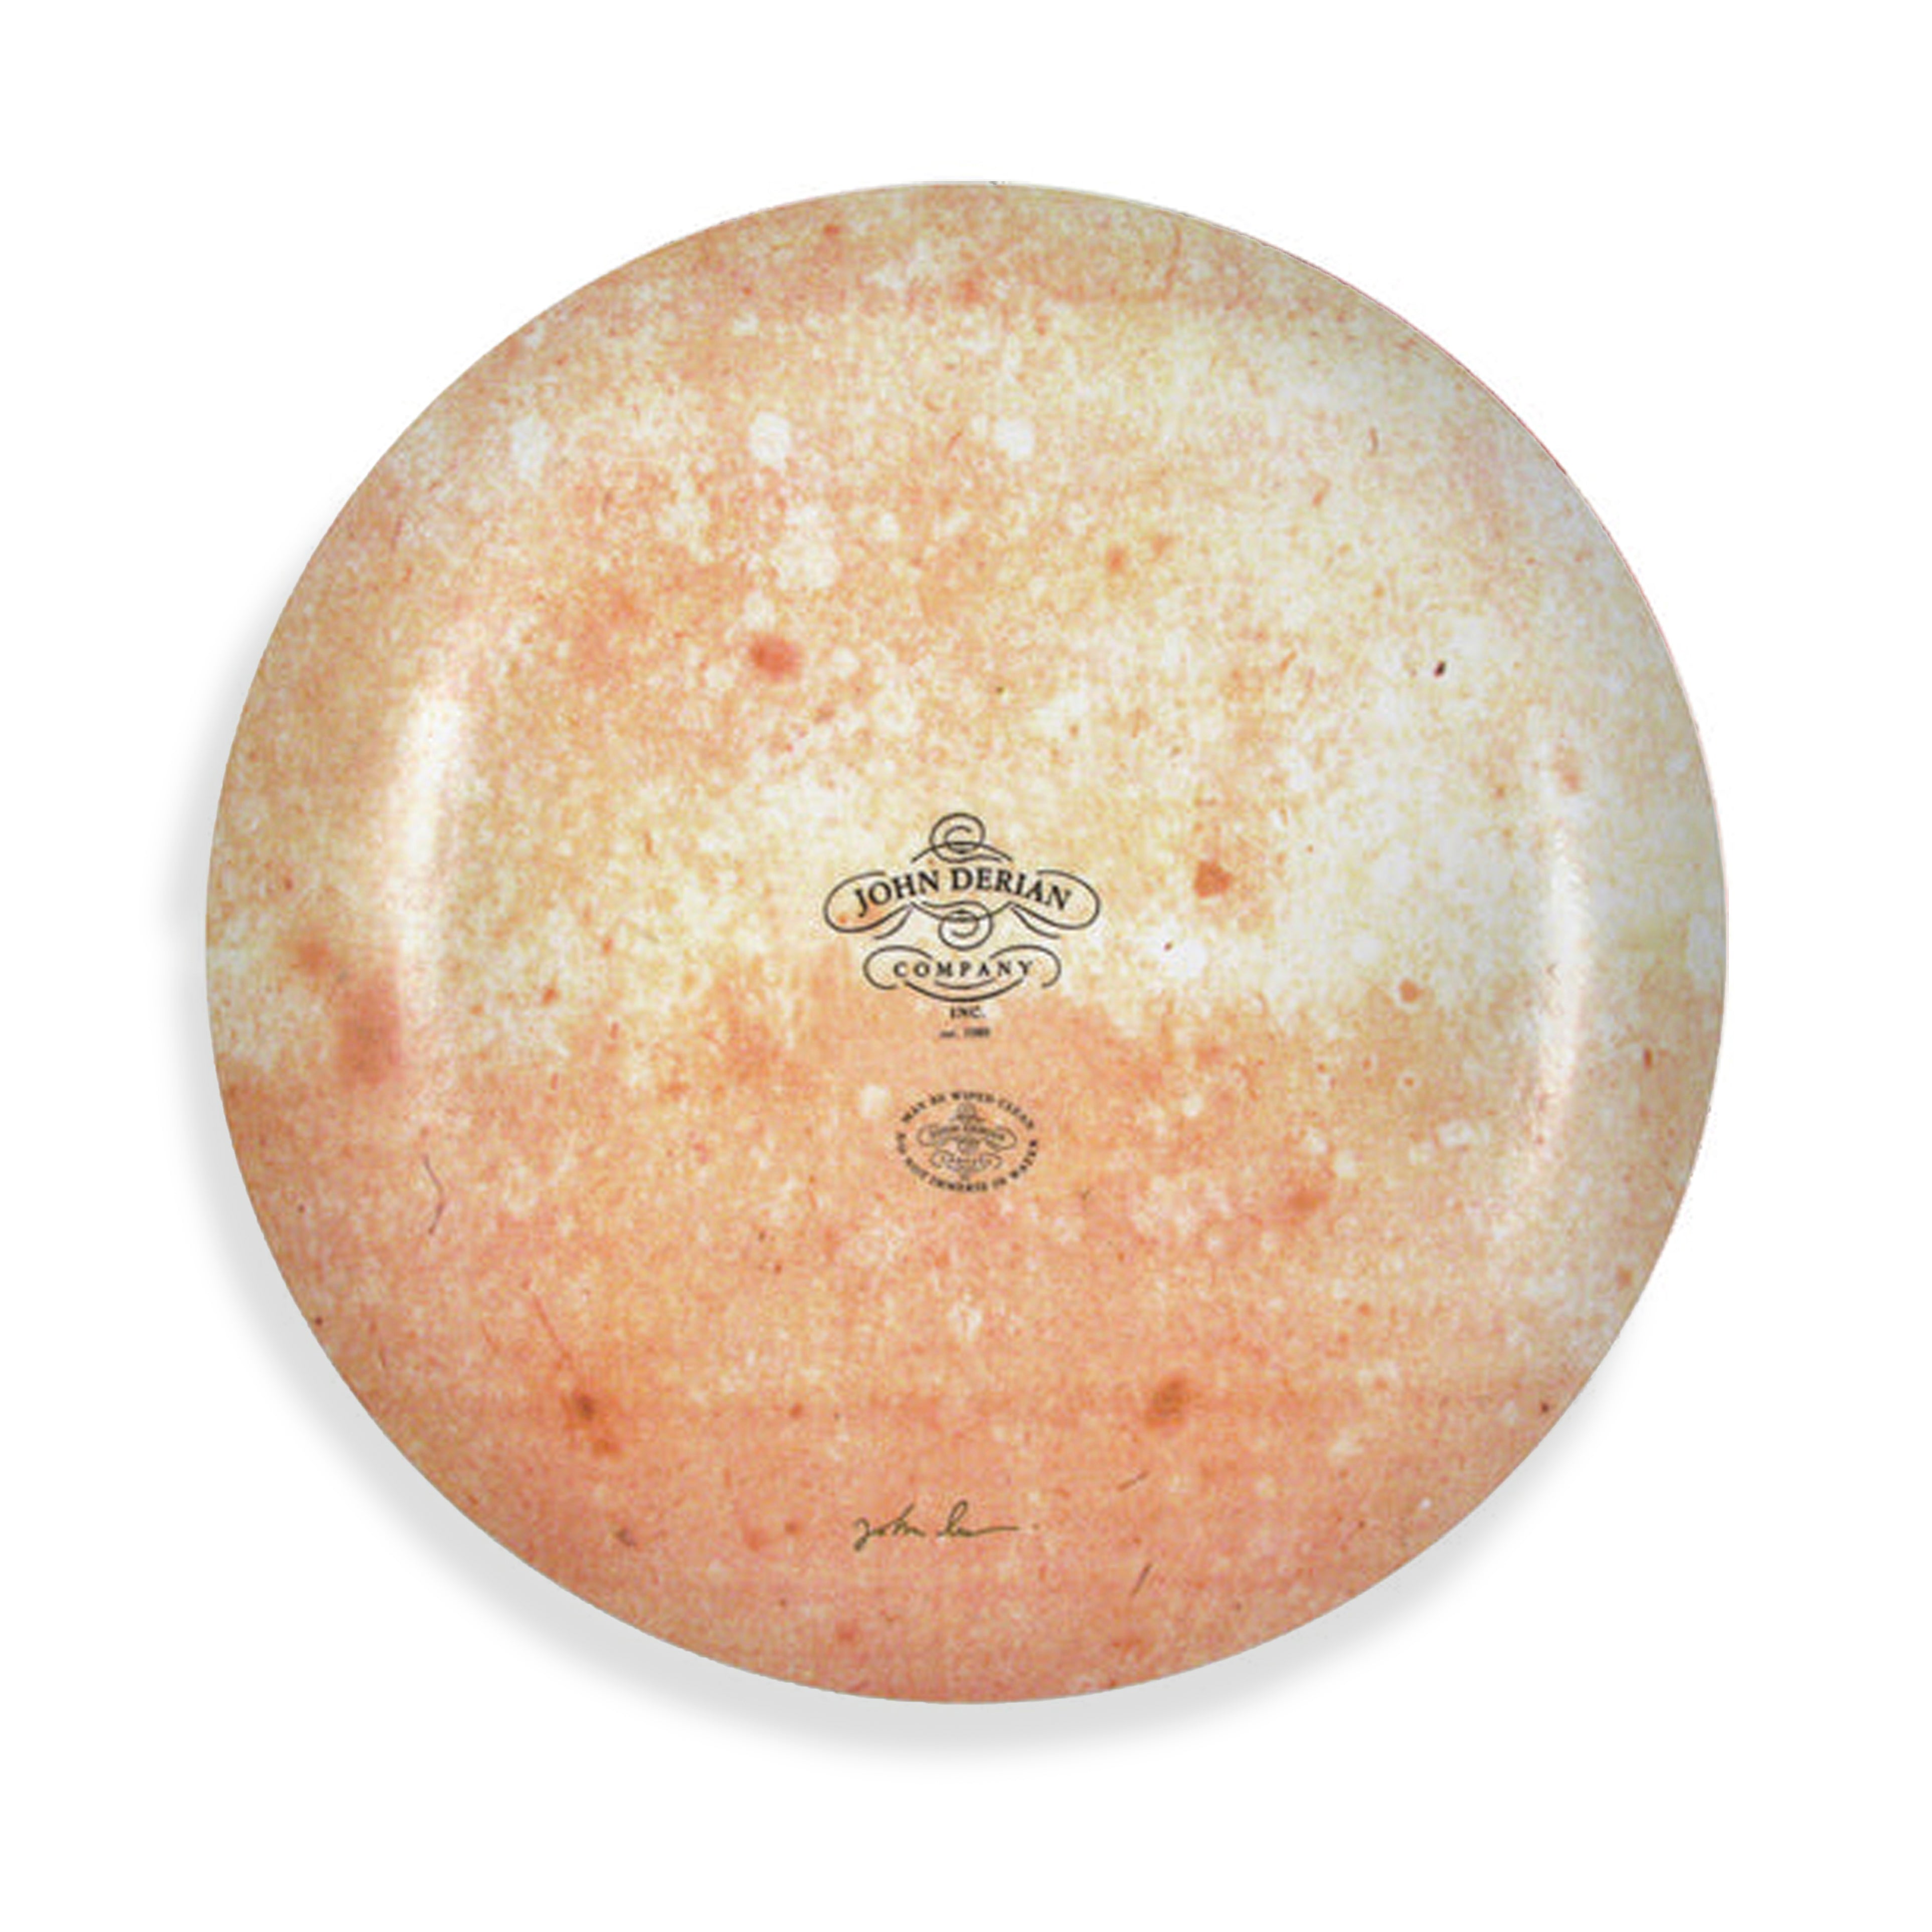 John Derian Camellia Round Platter, 40cm